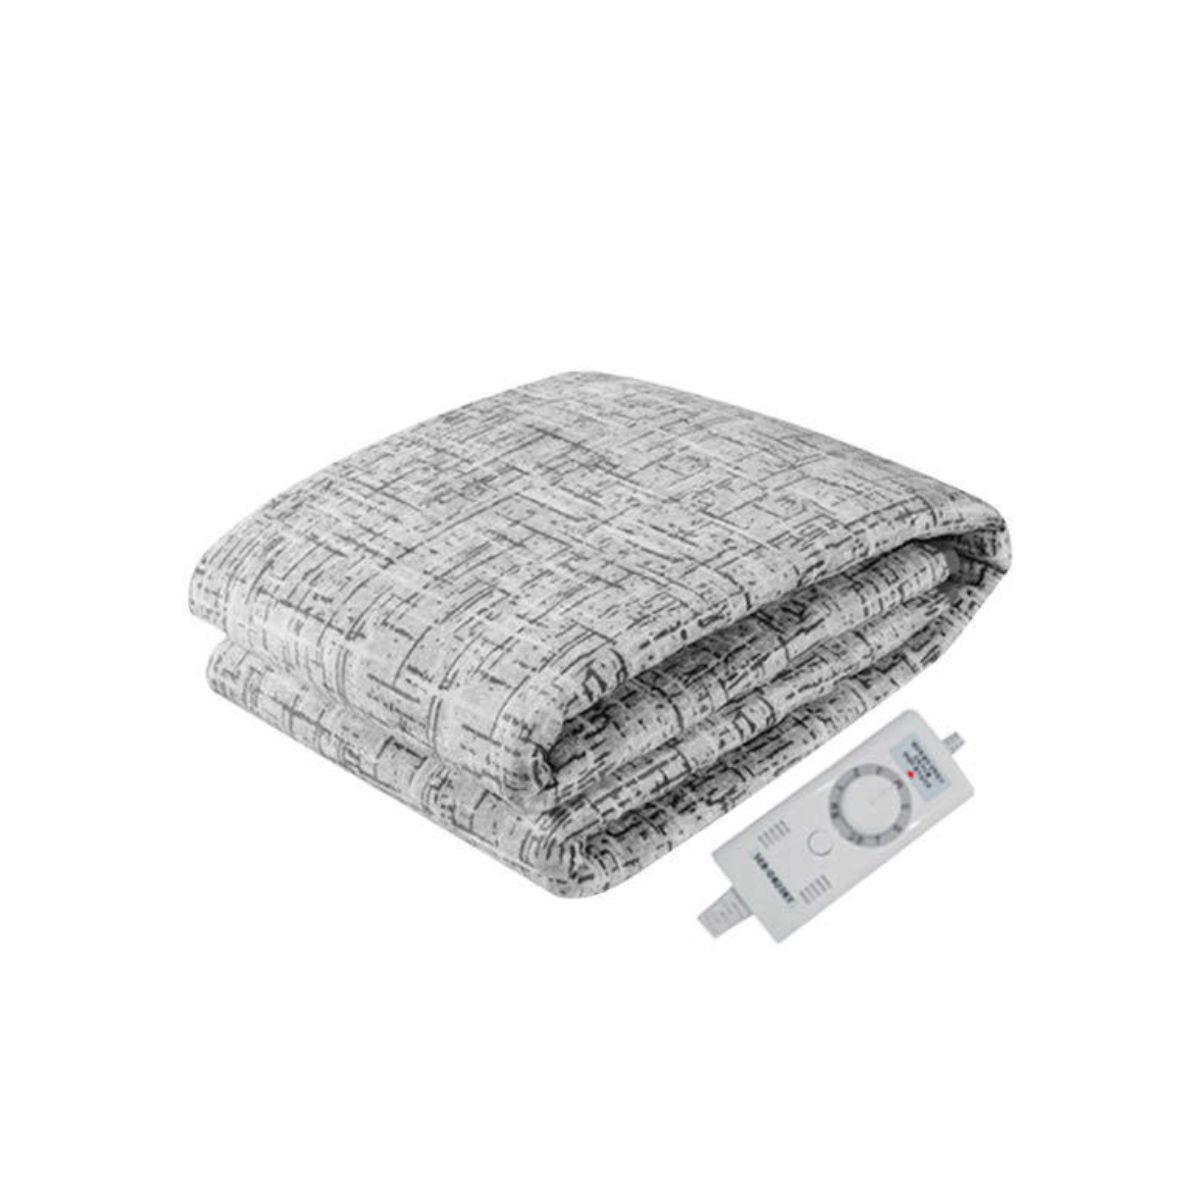 Shinil Electric Blanket - Mattress - SEB-D710BT - Grey